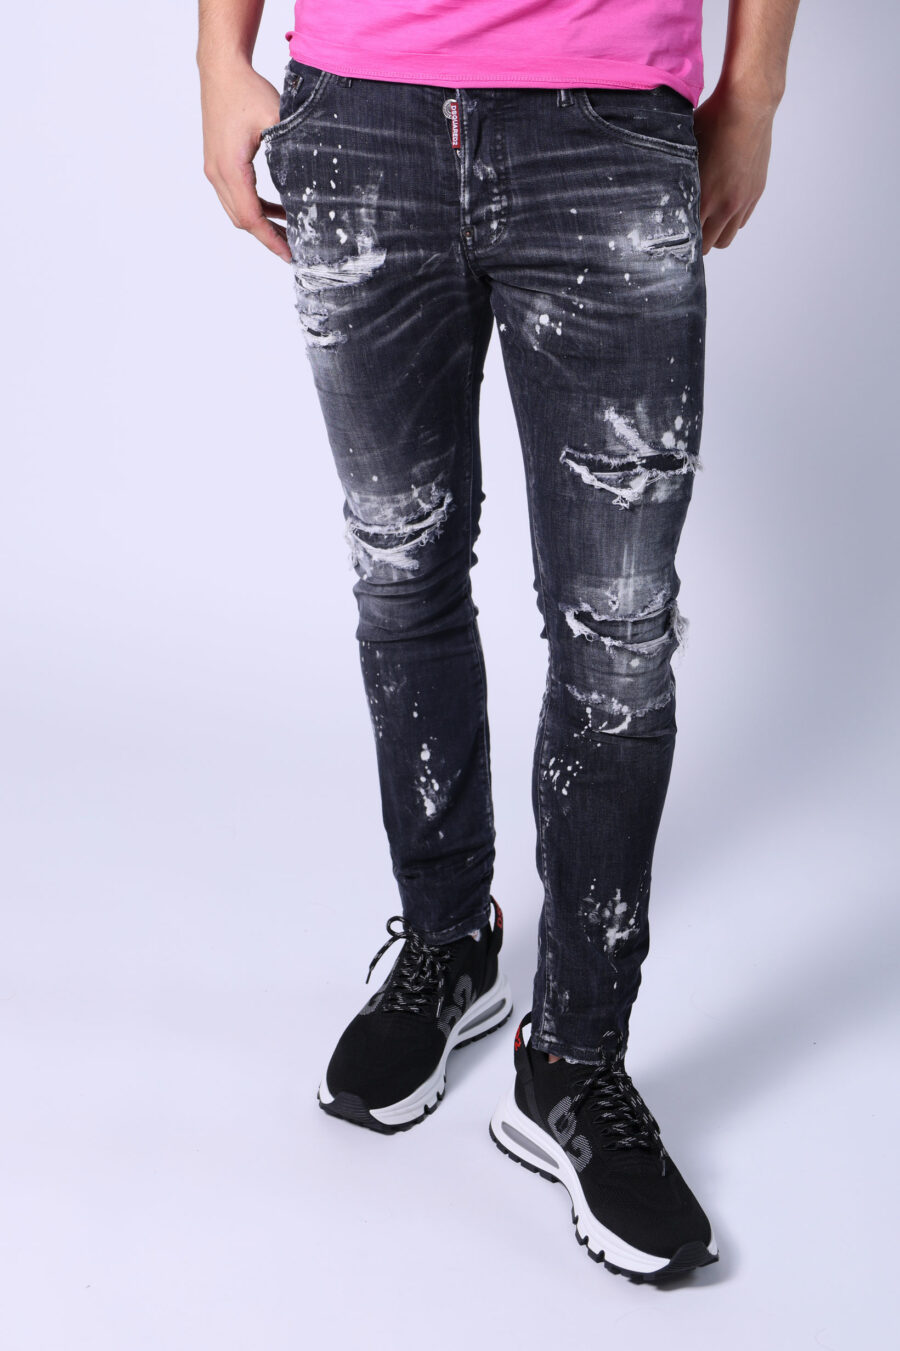 Pantalón vaquero "skater jean" negro desgastado con rotos - Untitled Catalog 05546